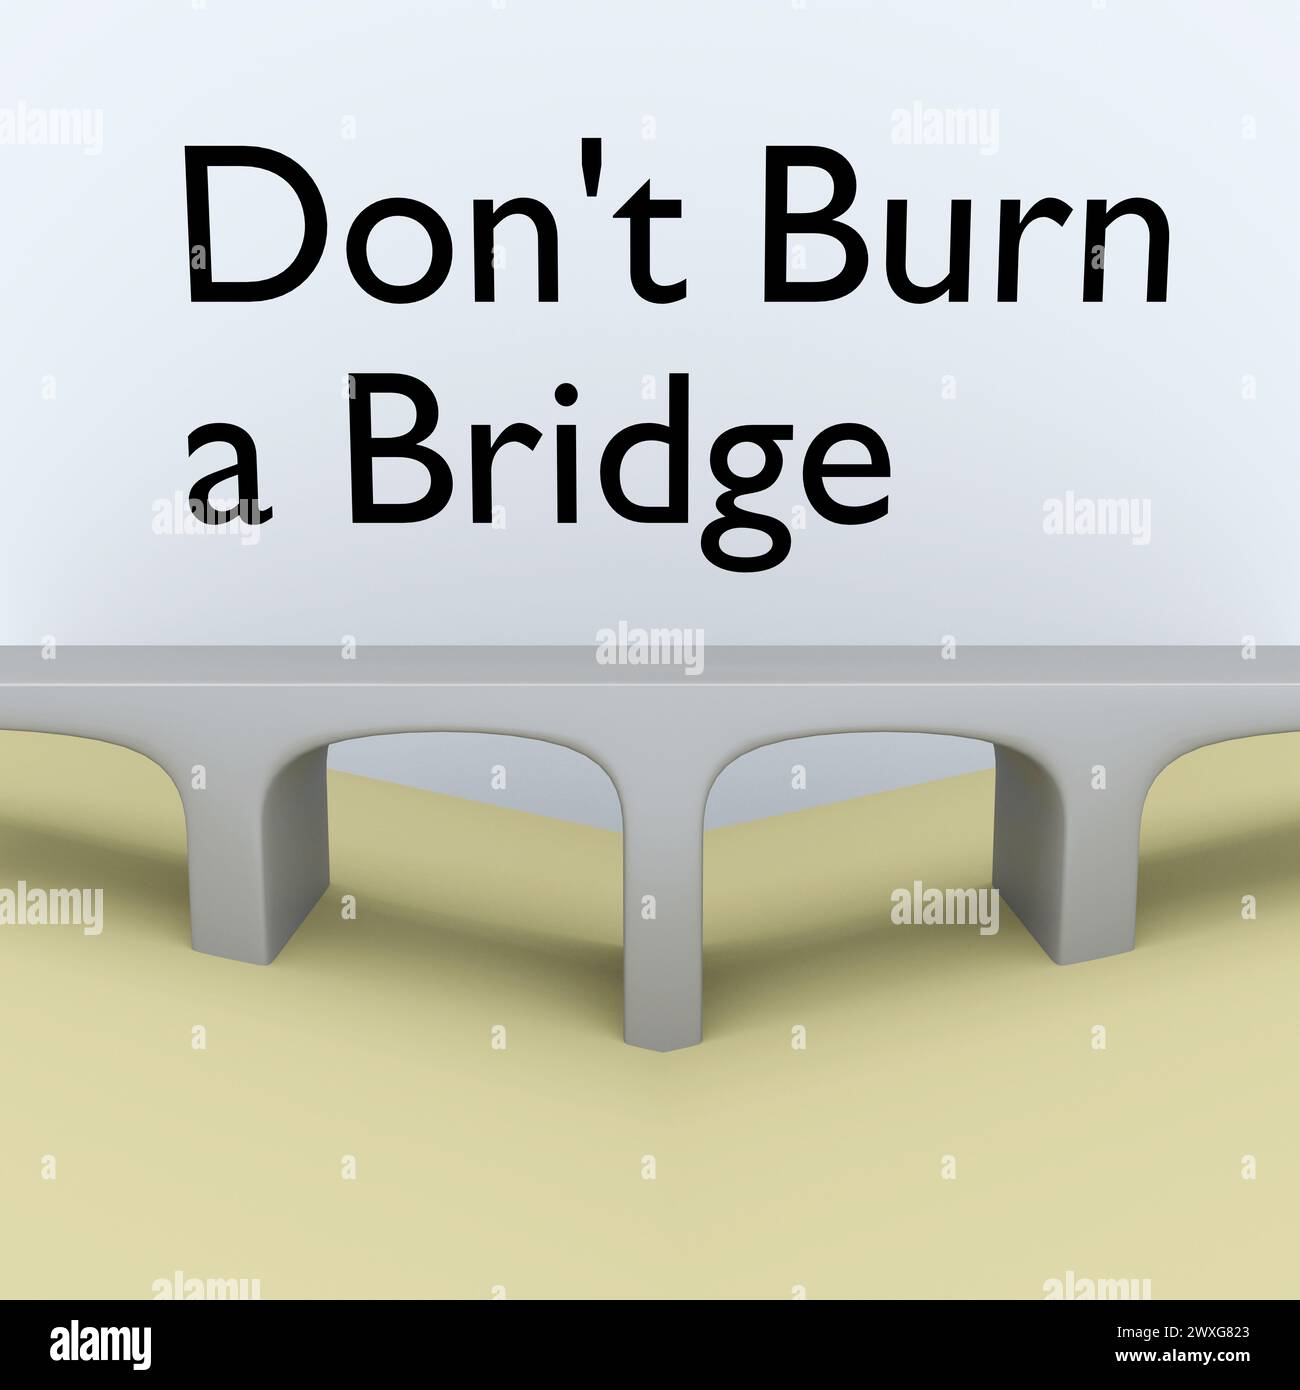 3D illustration a bridge titled as Don't Burn a Bridge. Stock Photo